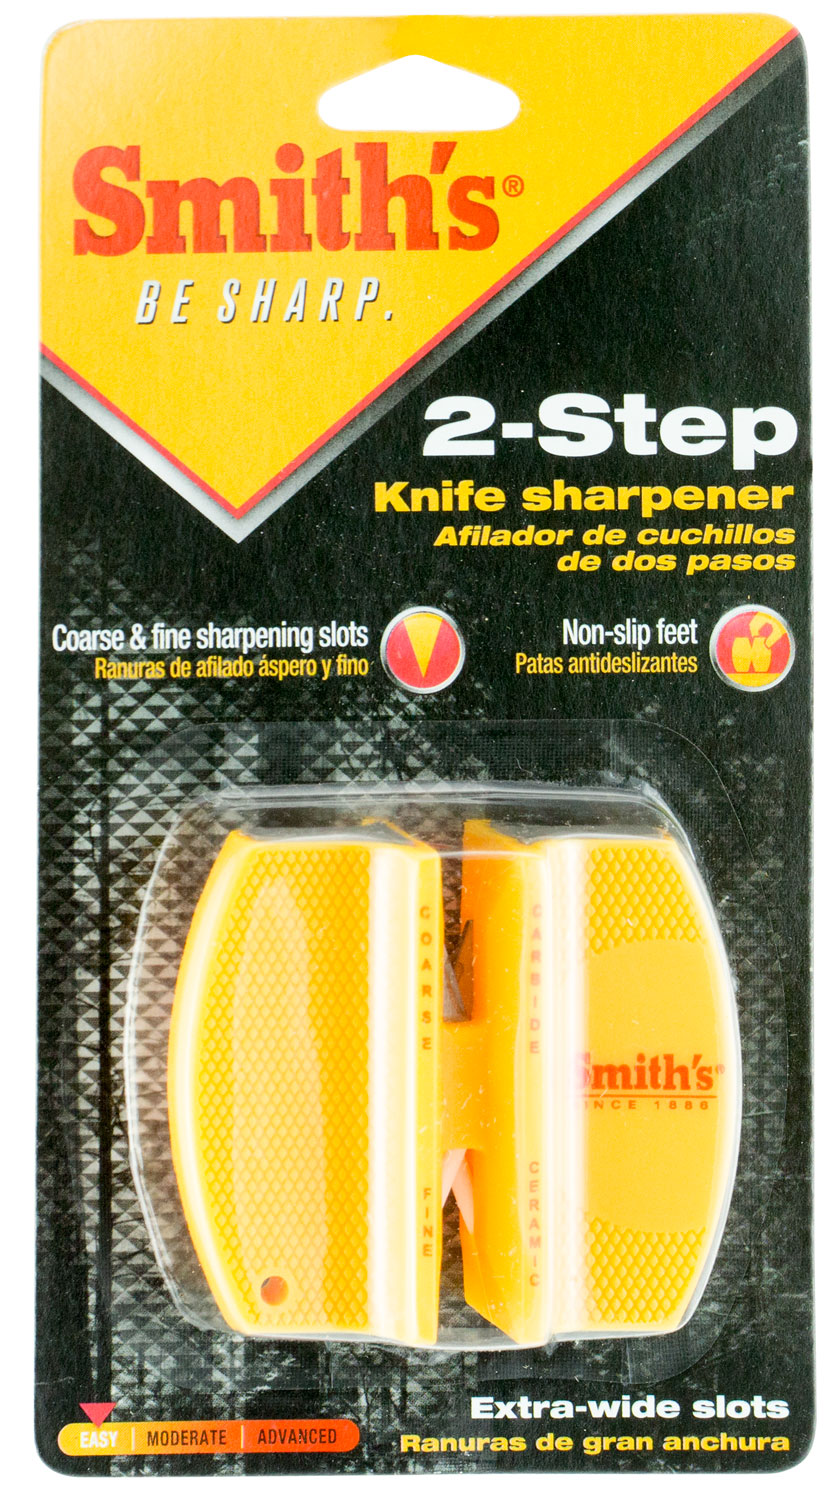 Smiths Products CCKS Knife Sharpener 2-Step Fine, Coarse Carbide, Ceramic Sharpener Rubber Handle Yellow